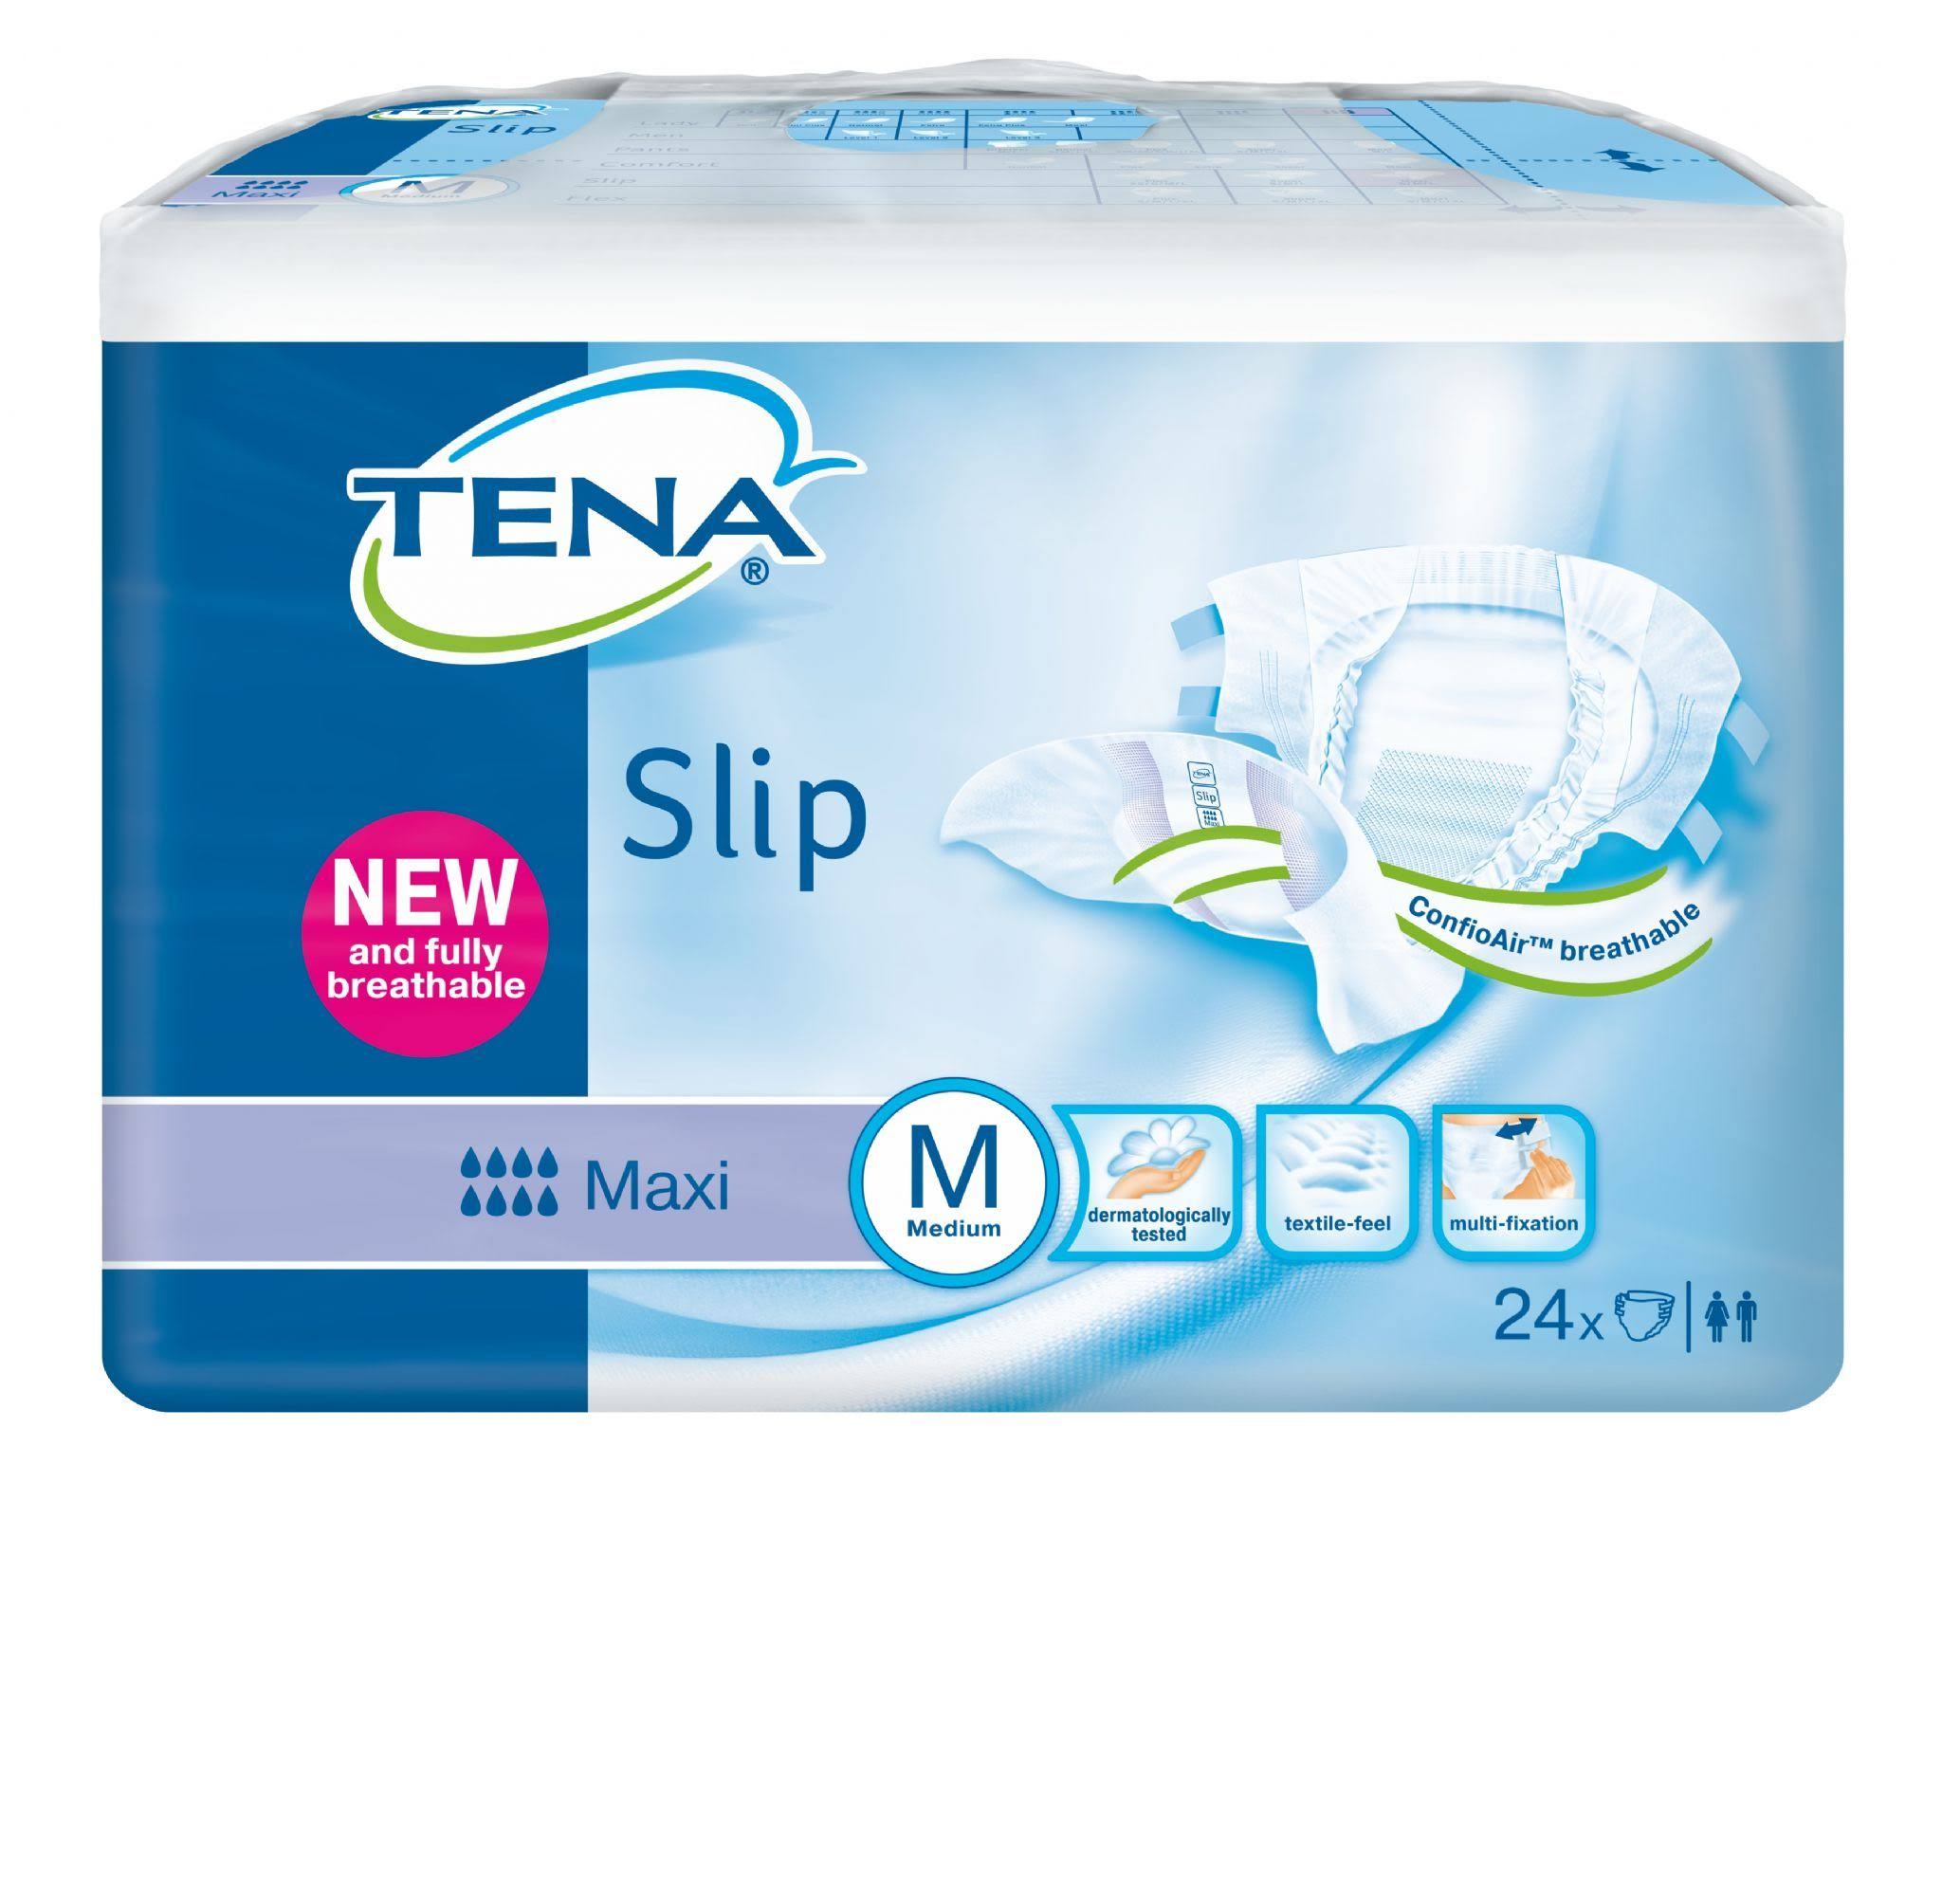 Tena Slip Maxi Incontinence Aids - Medium, Pack of 24